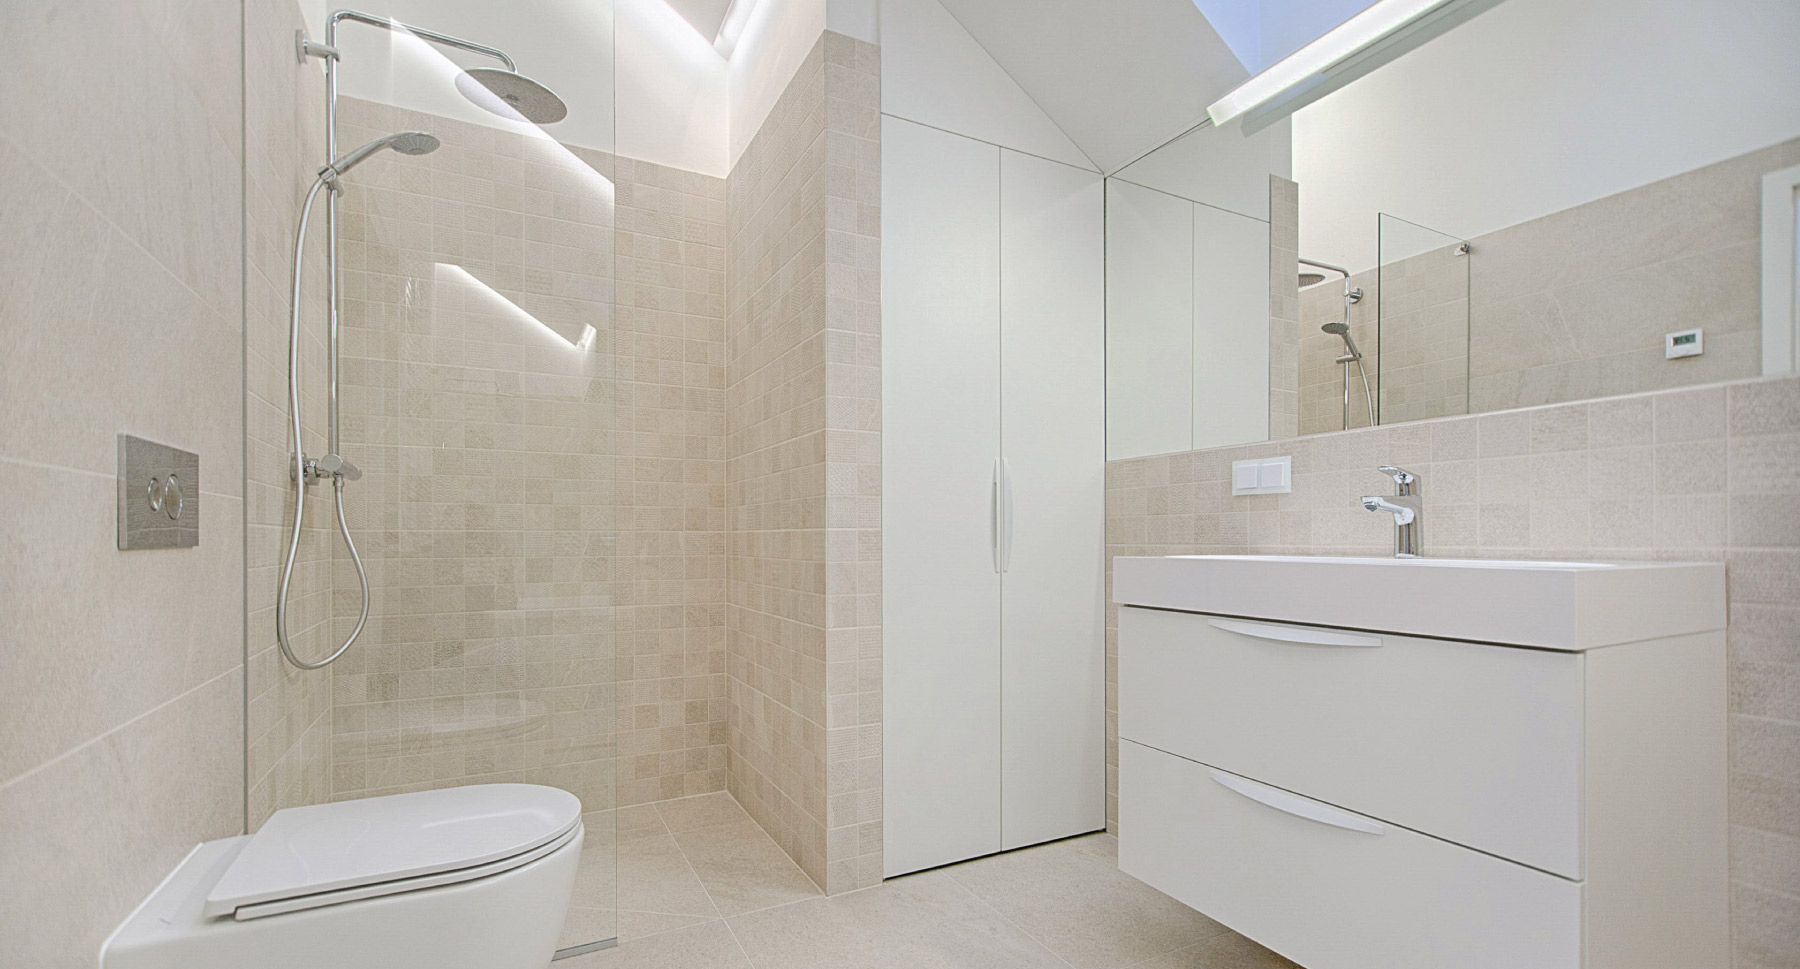 Bathroom refurbishment in flat-refurbishment